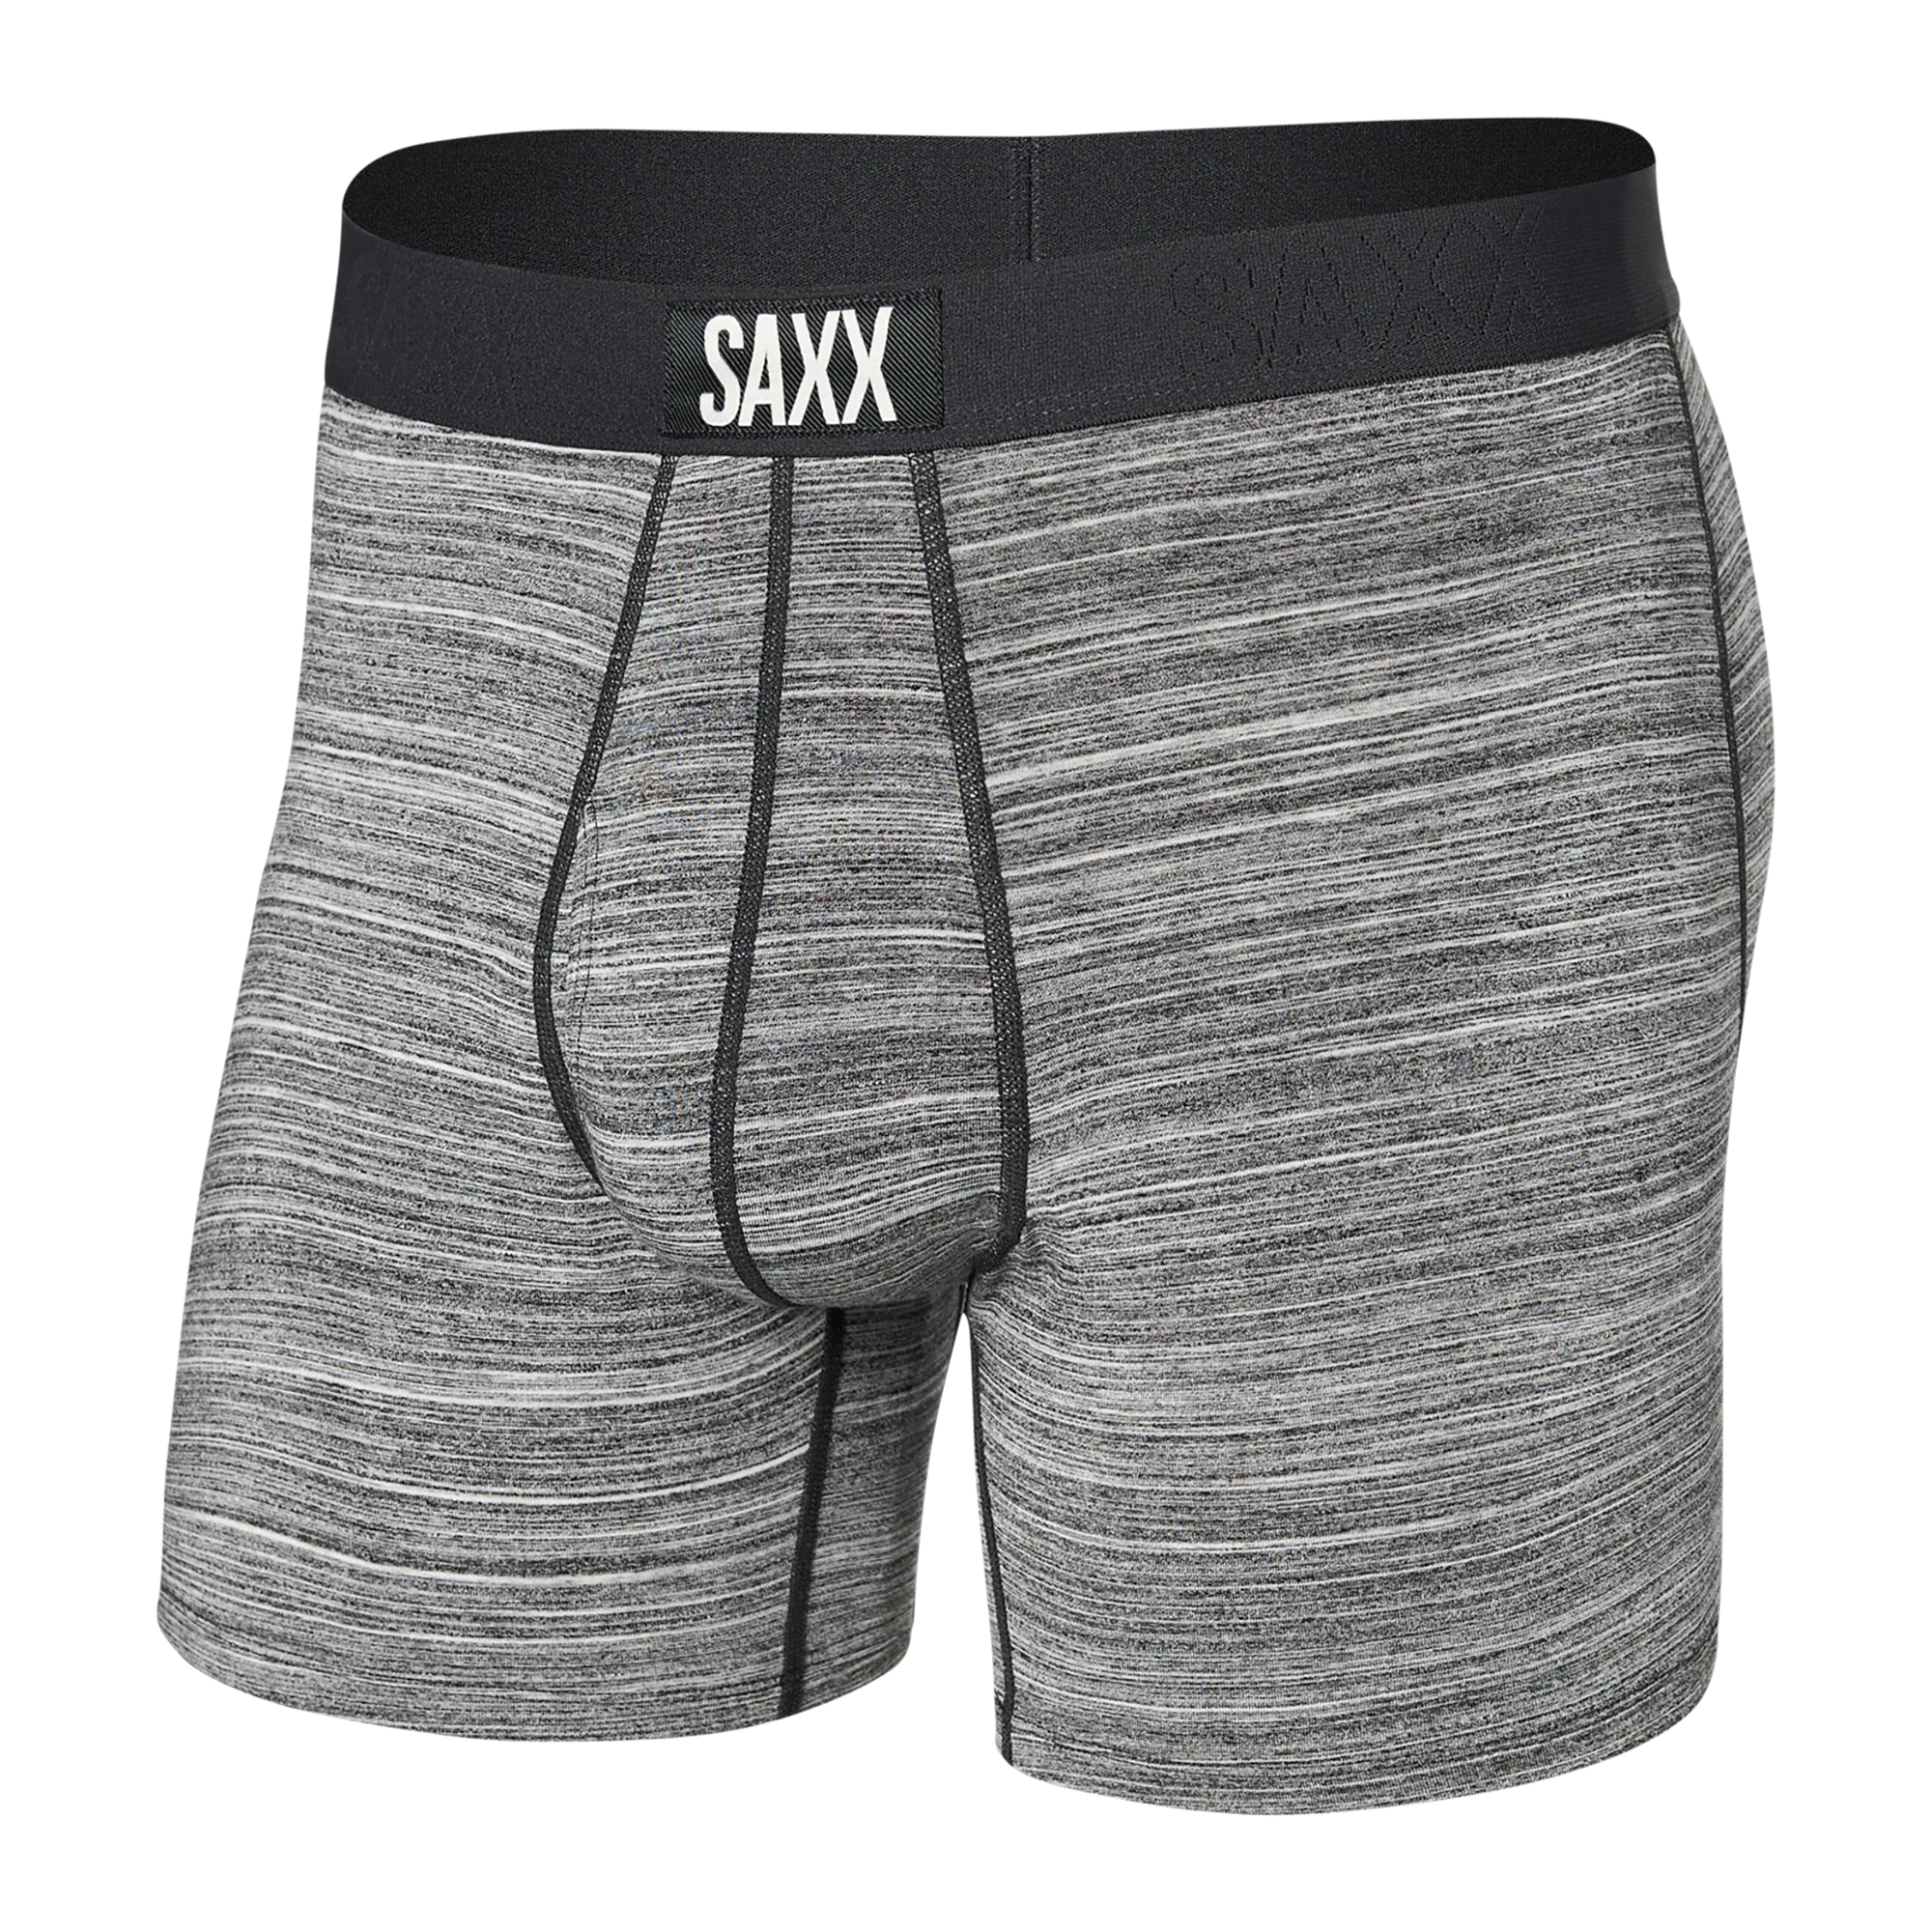 'SAXX Ultra Super Soft Boxer Brief - Space Dye Heather' in 'Grey' colour